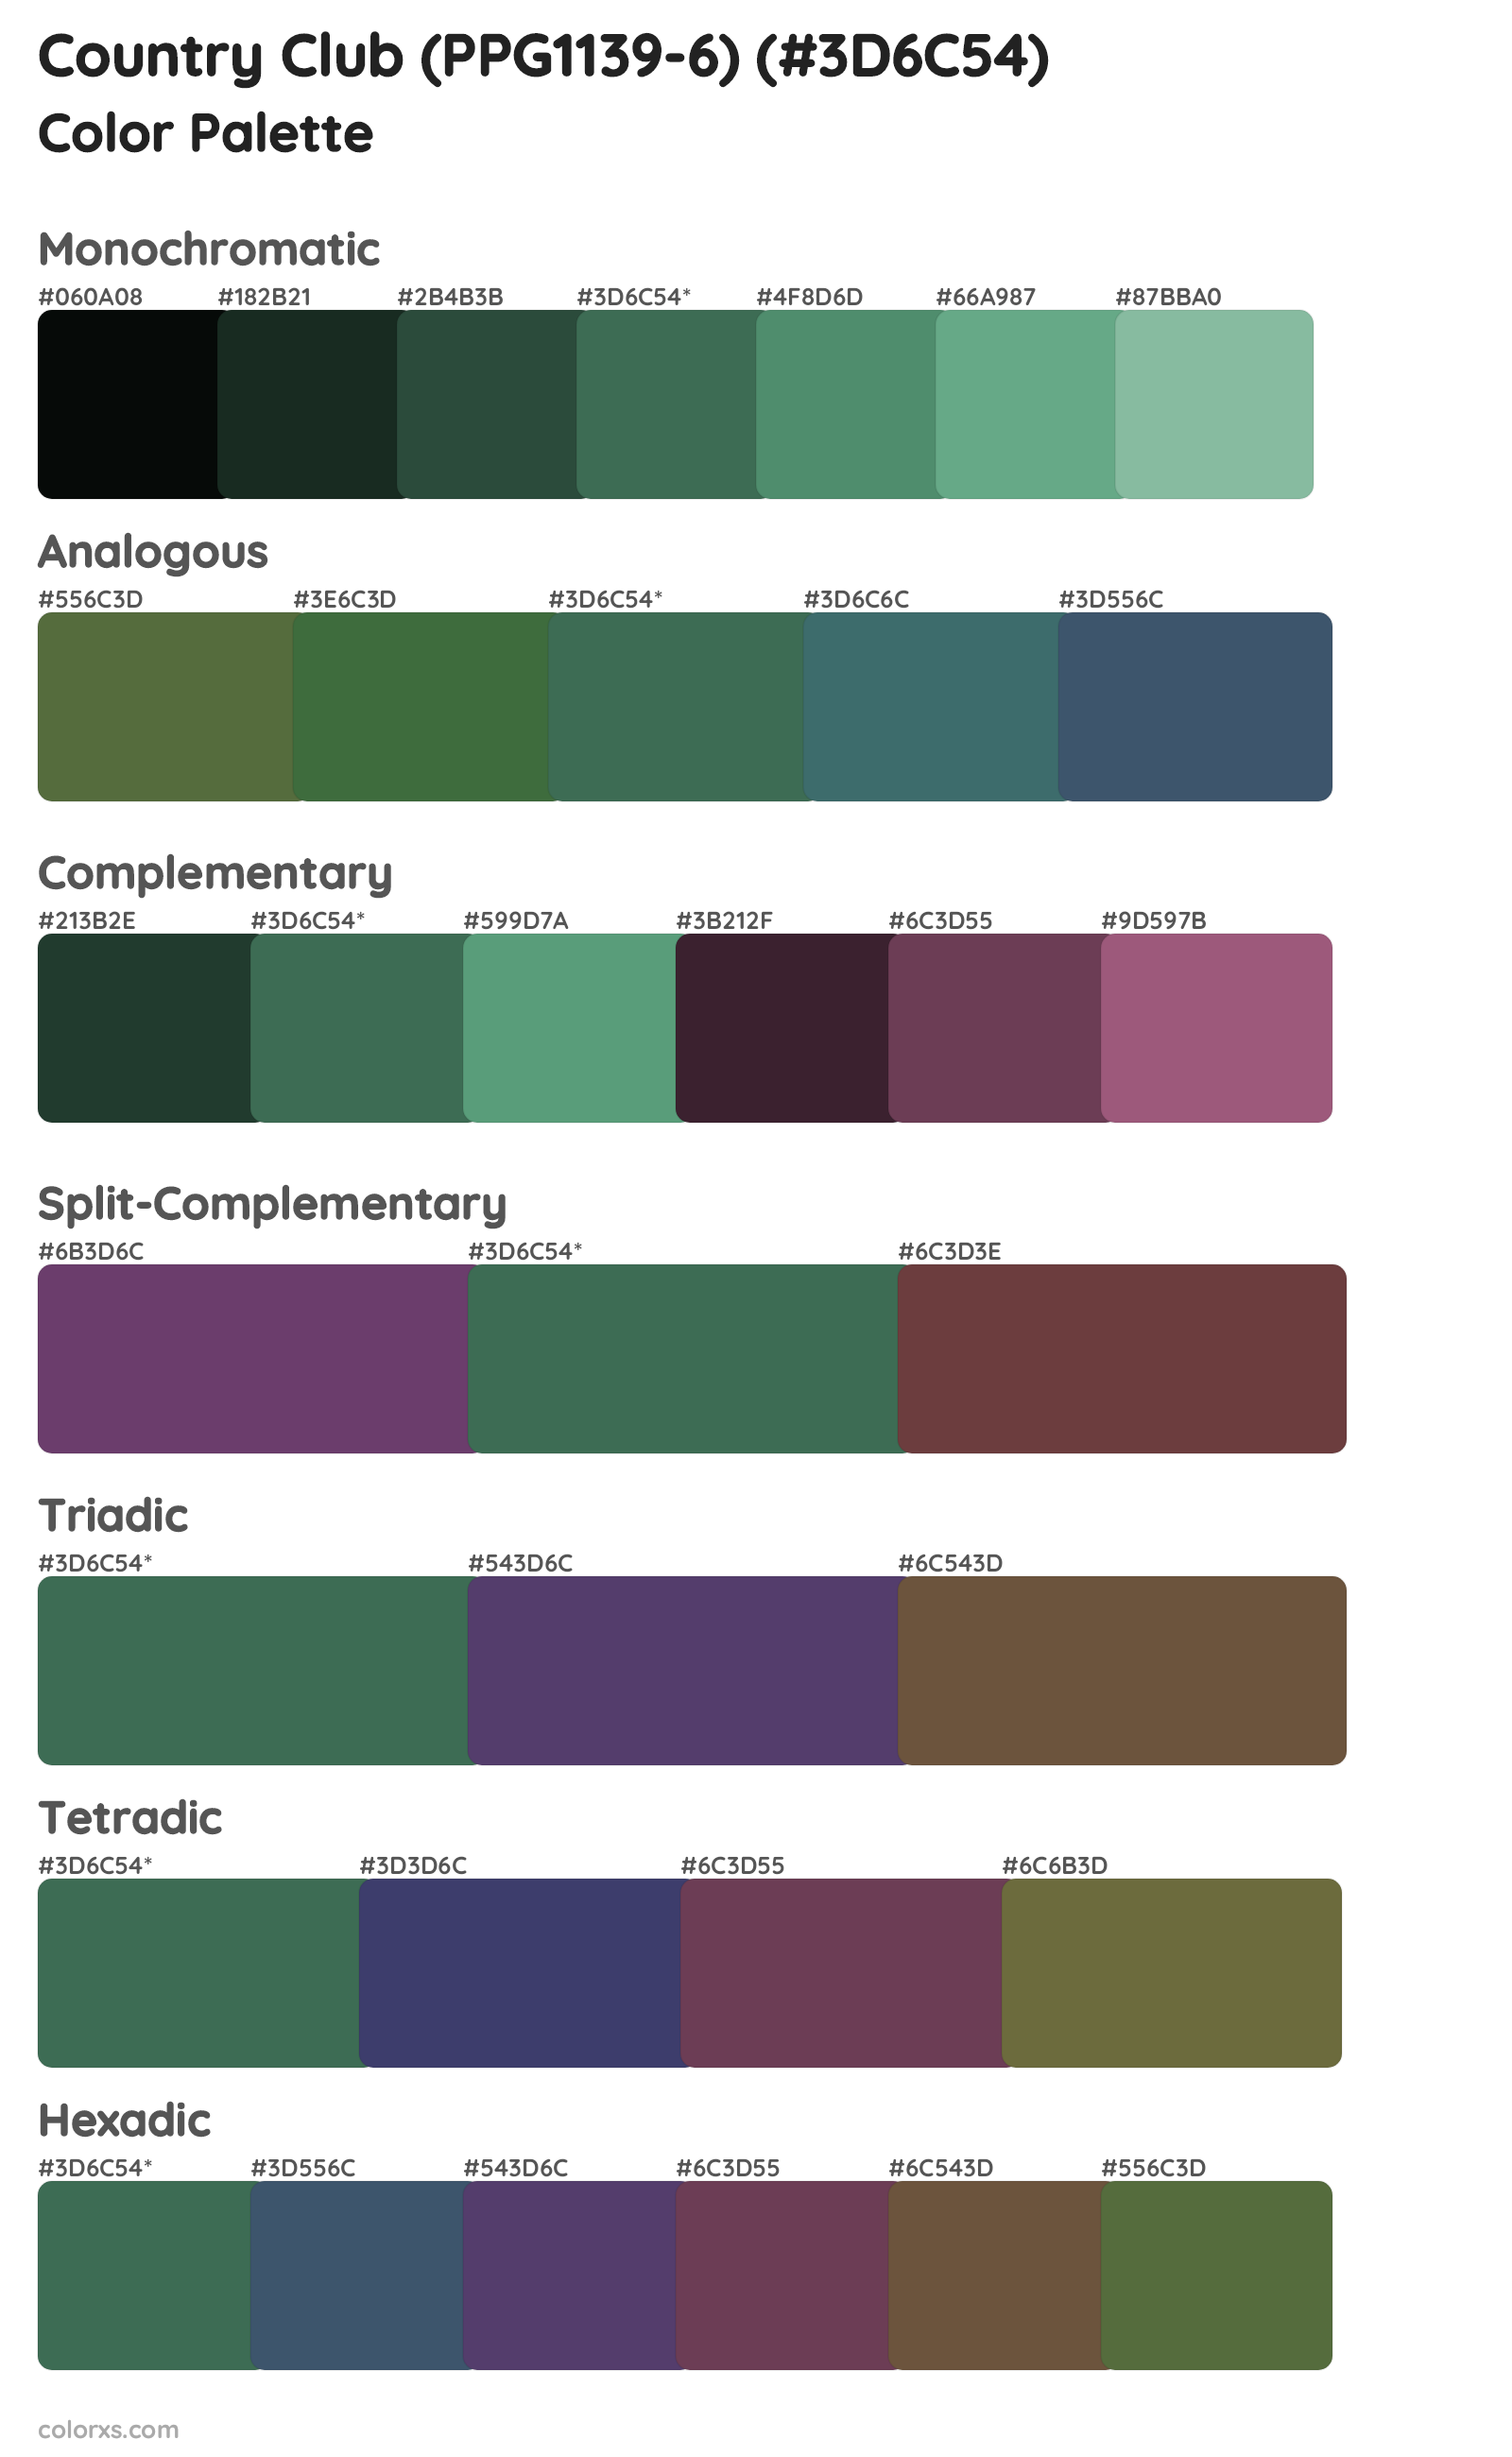 Country Club (PPG1139-6) Color Scheme Palettes